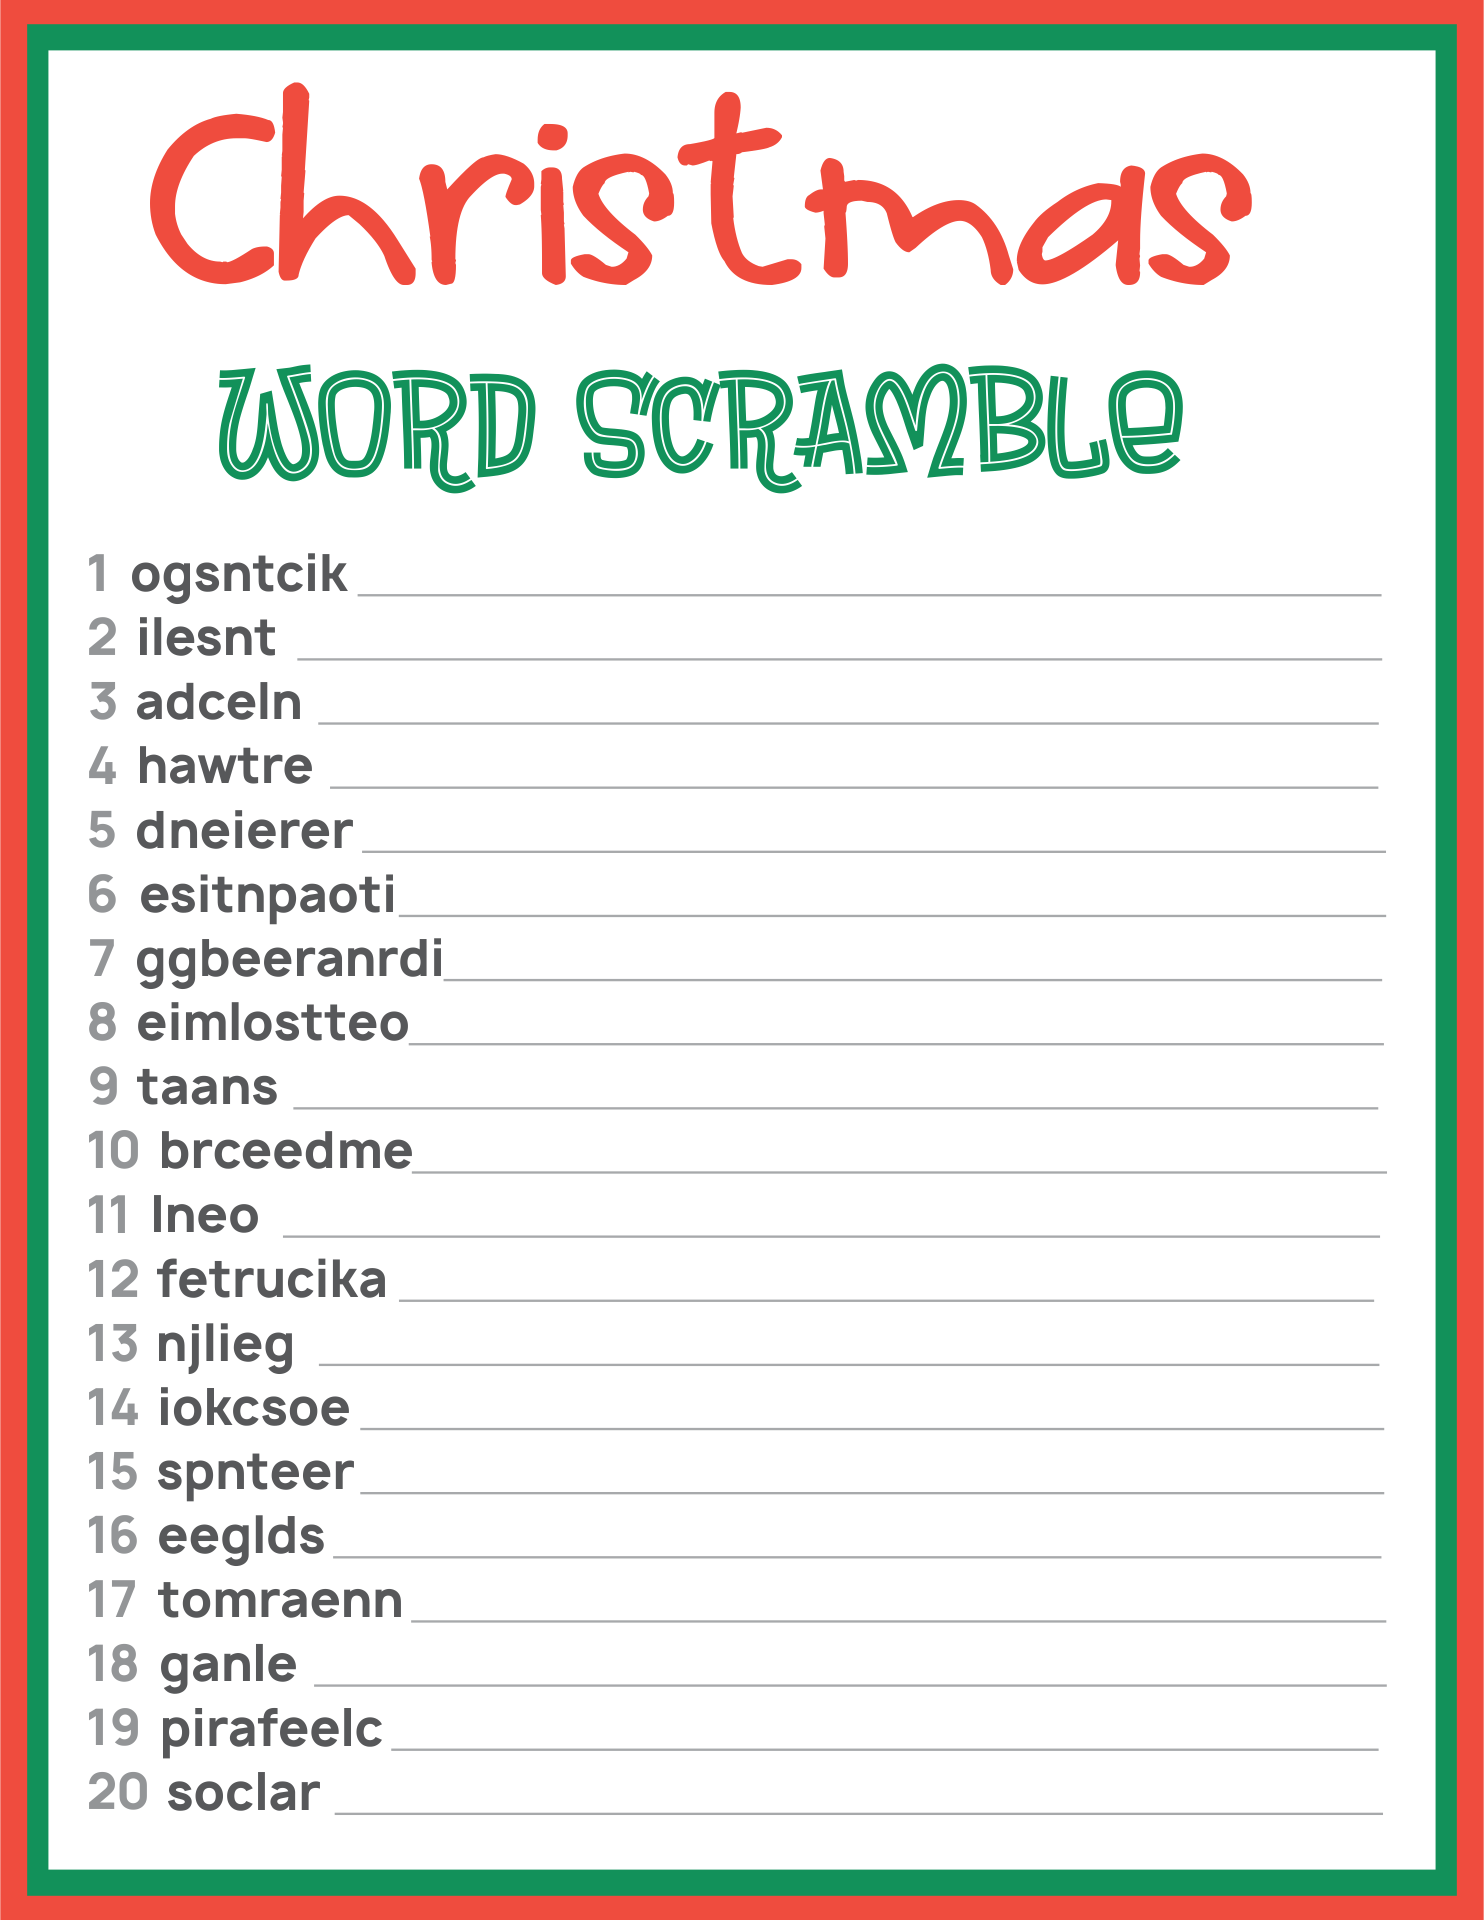 free-printable-christmas-word-scramble-with-answers